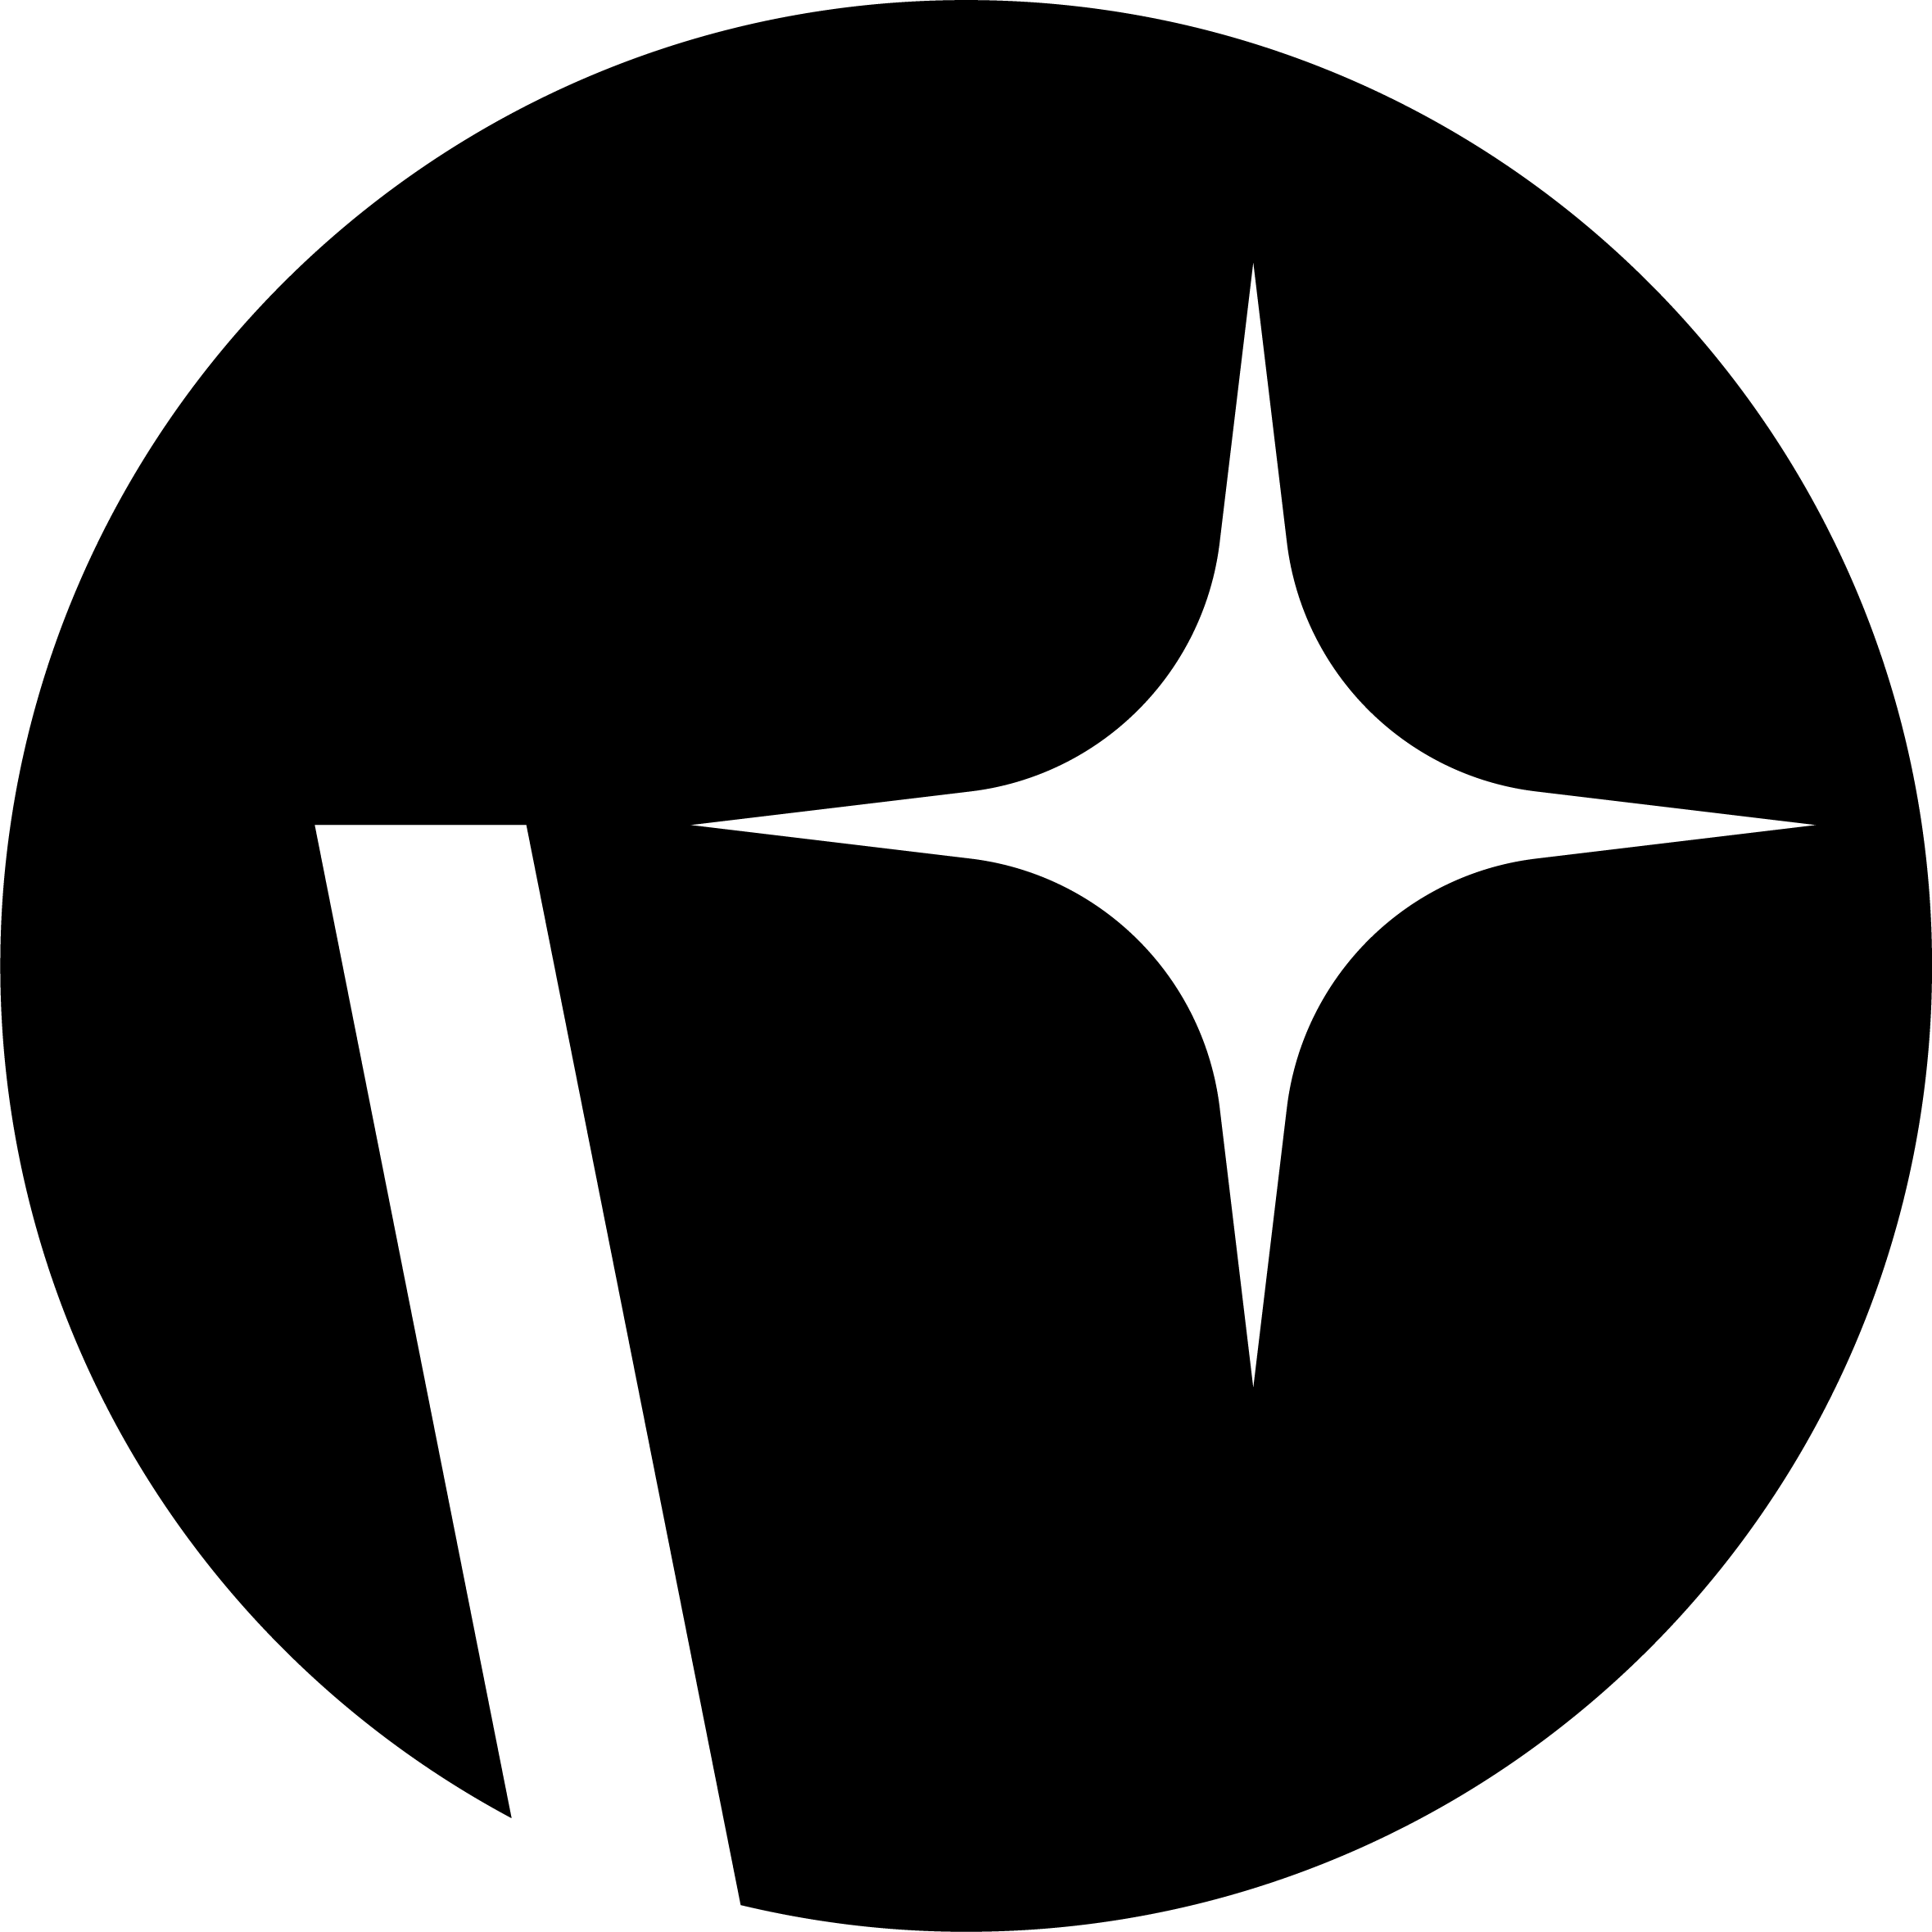 Wallrunners logo